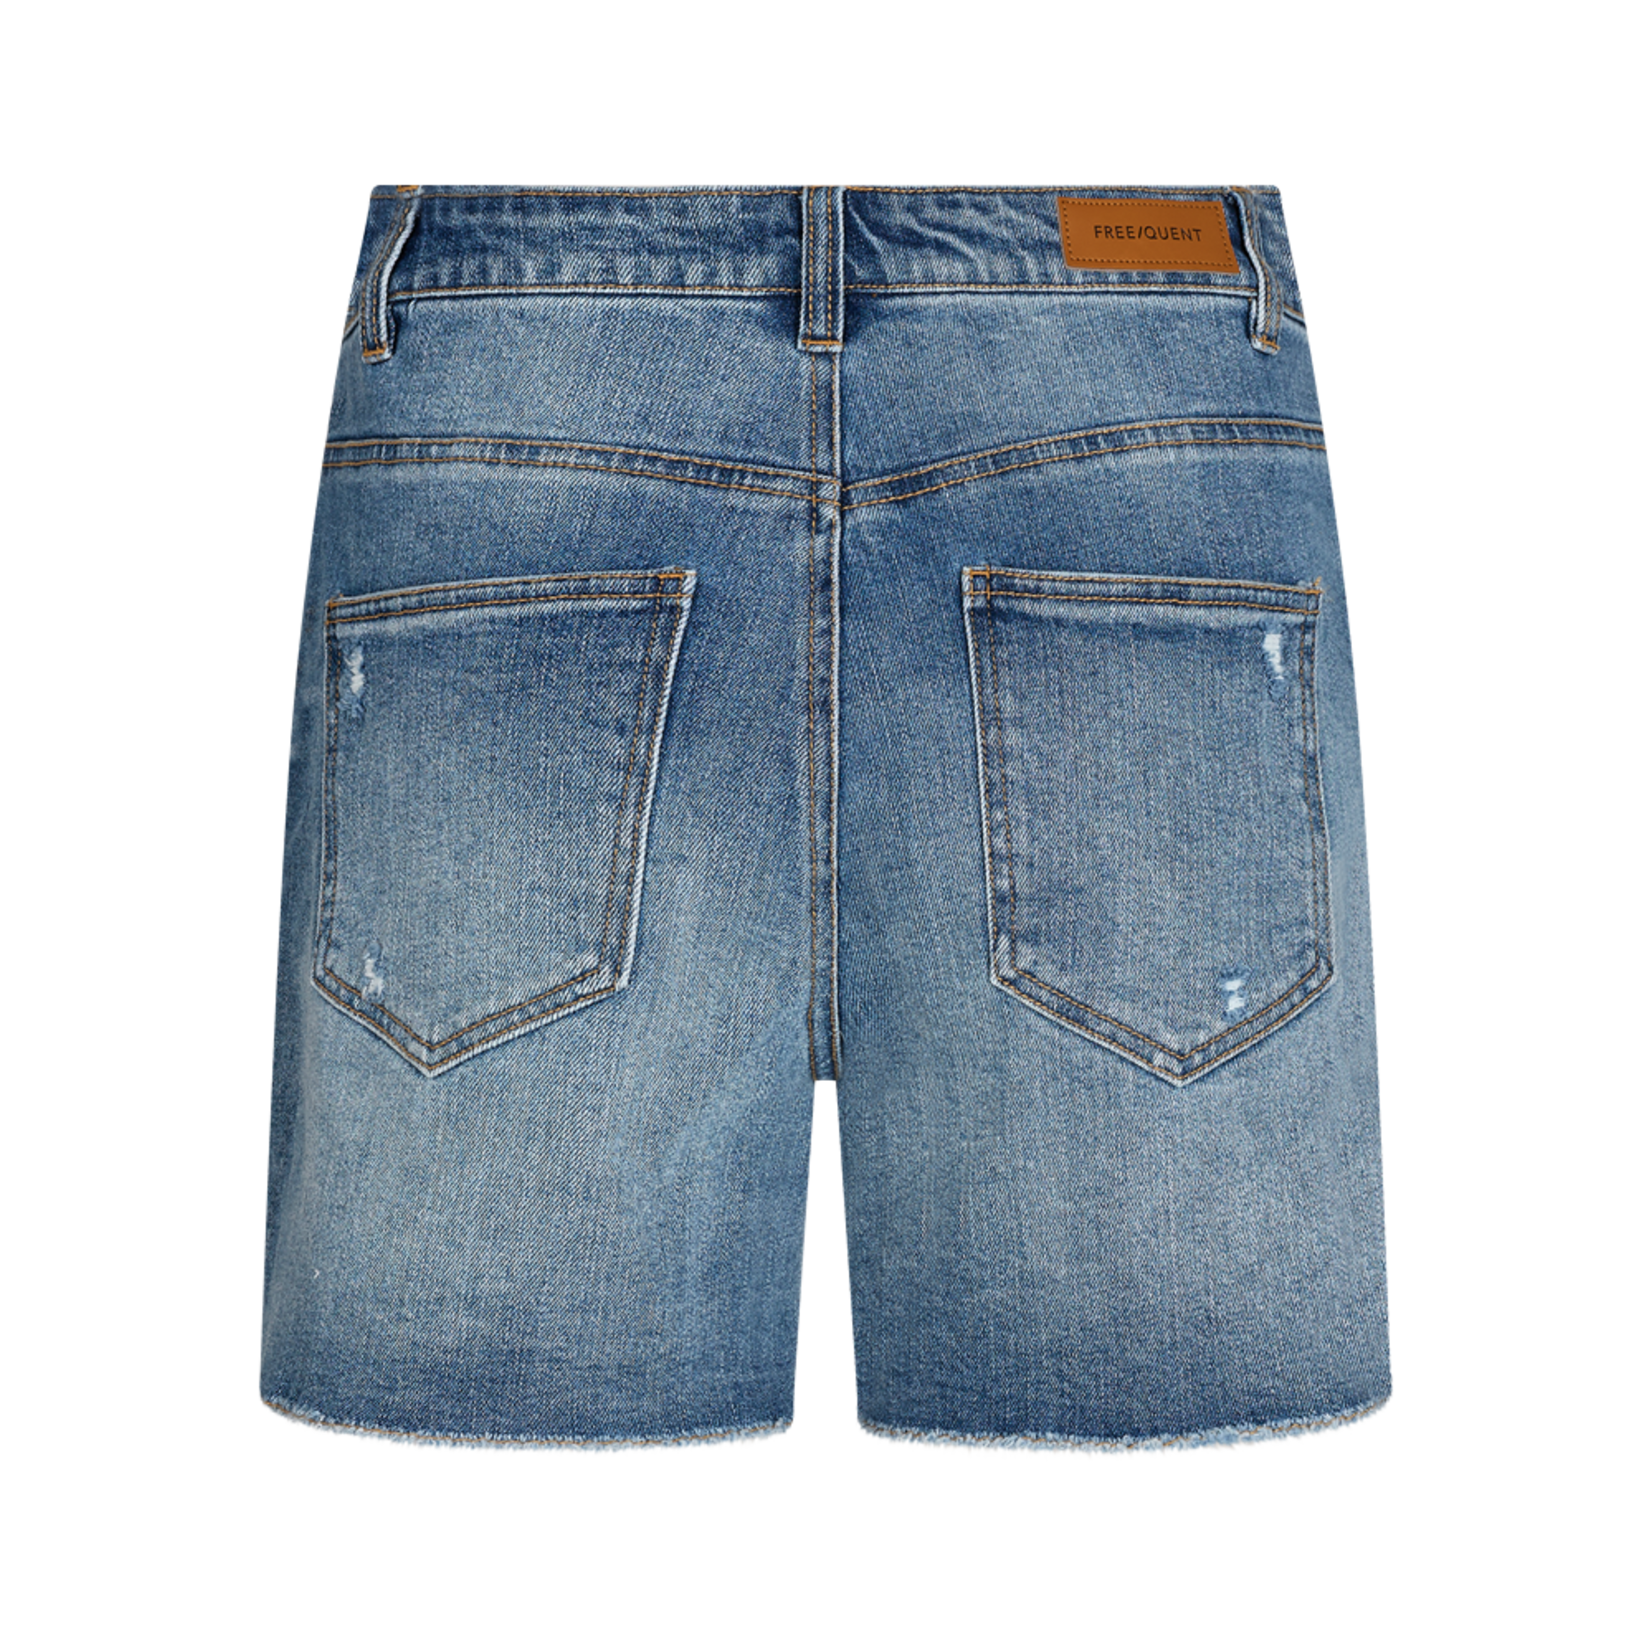 Free/quent Bagger Short: ideaal voor de zomer, deze jeans short.